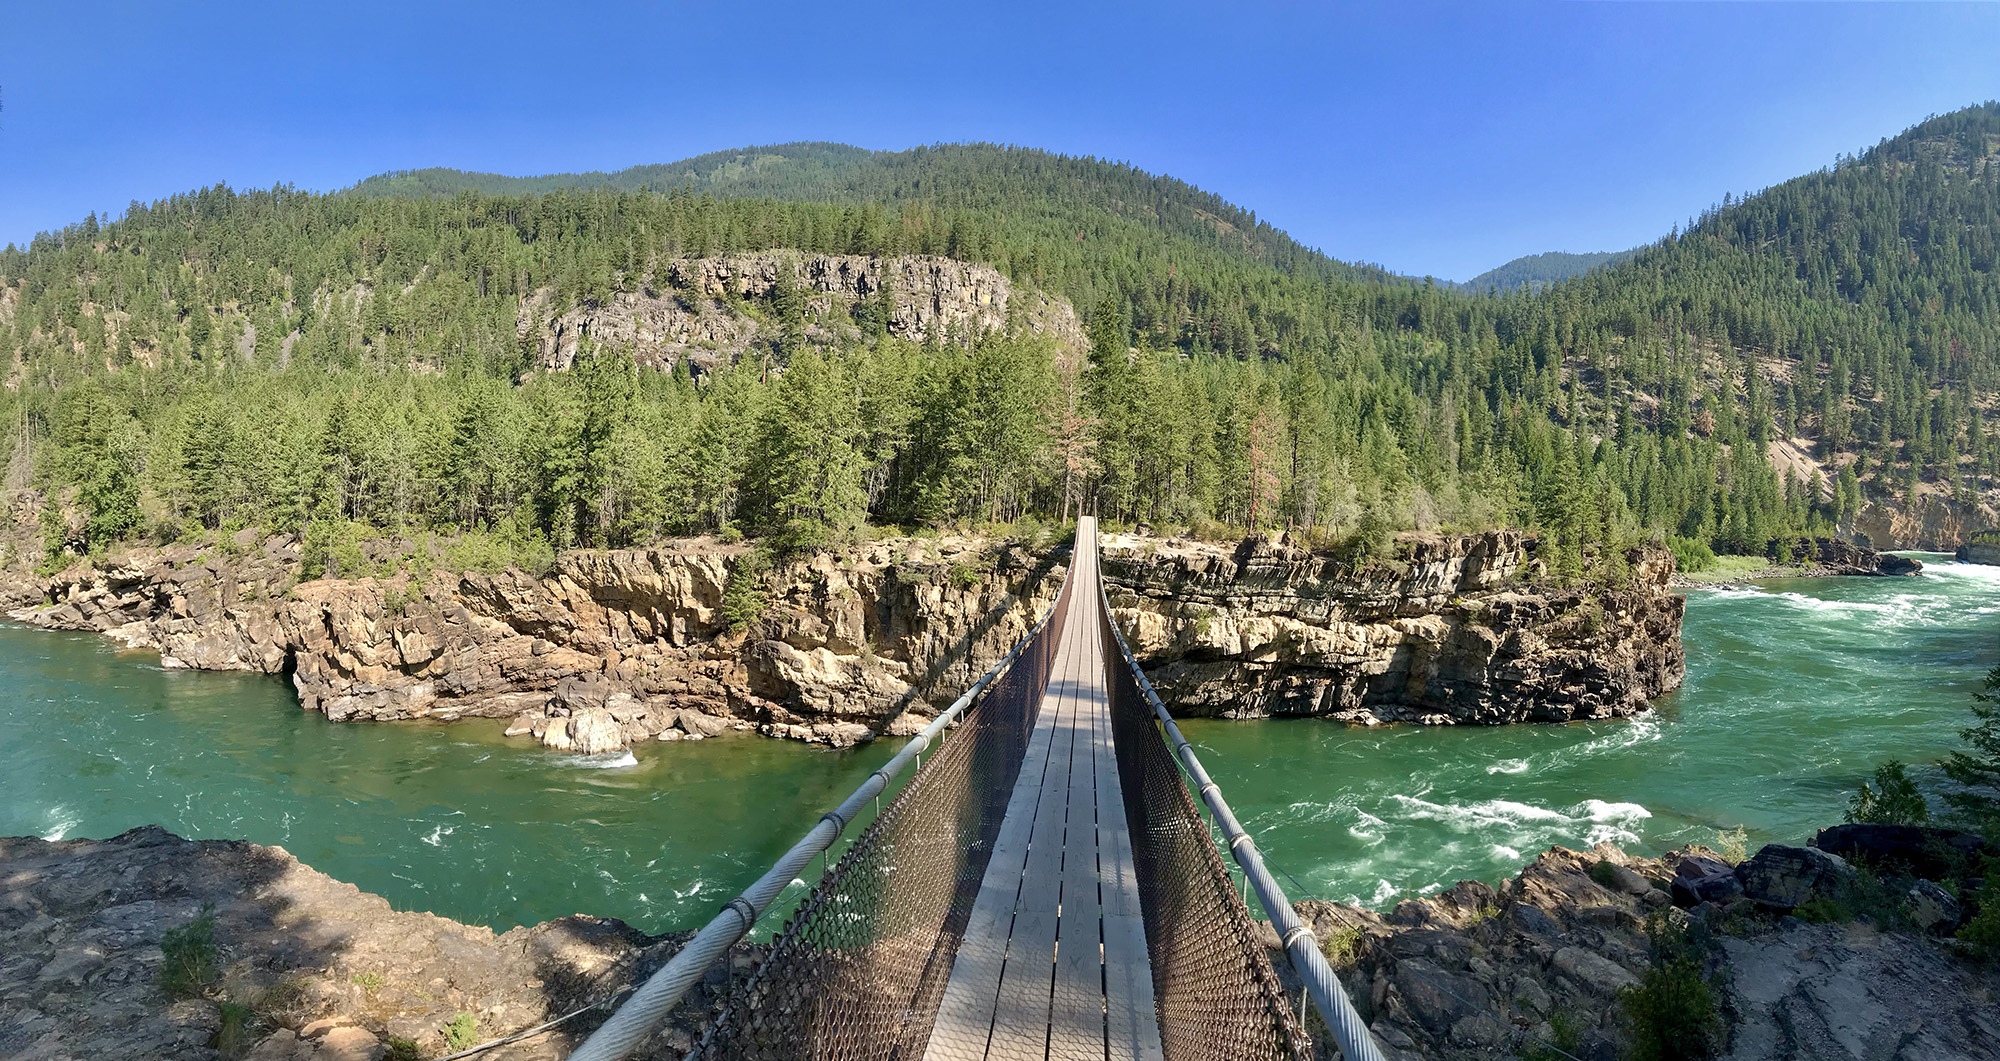 A swinging bridge stretches across a deep river gorge. 